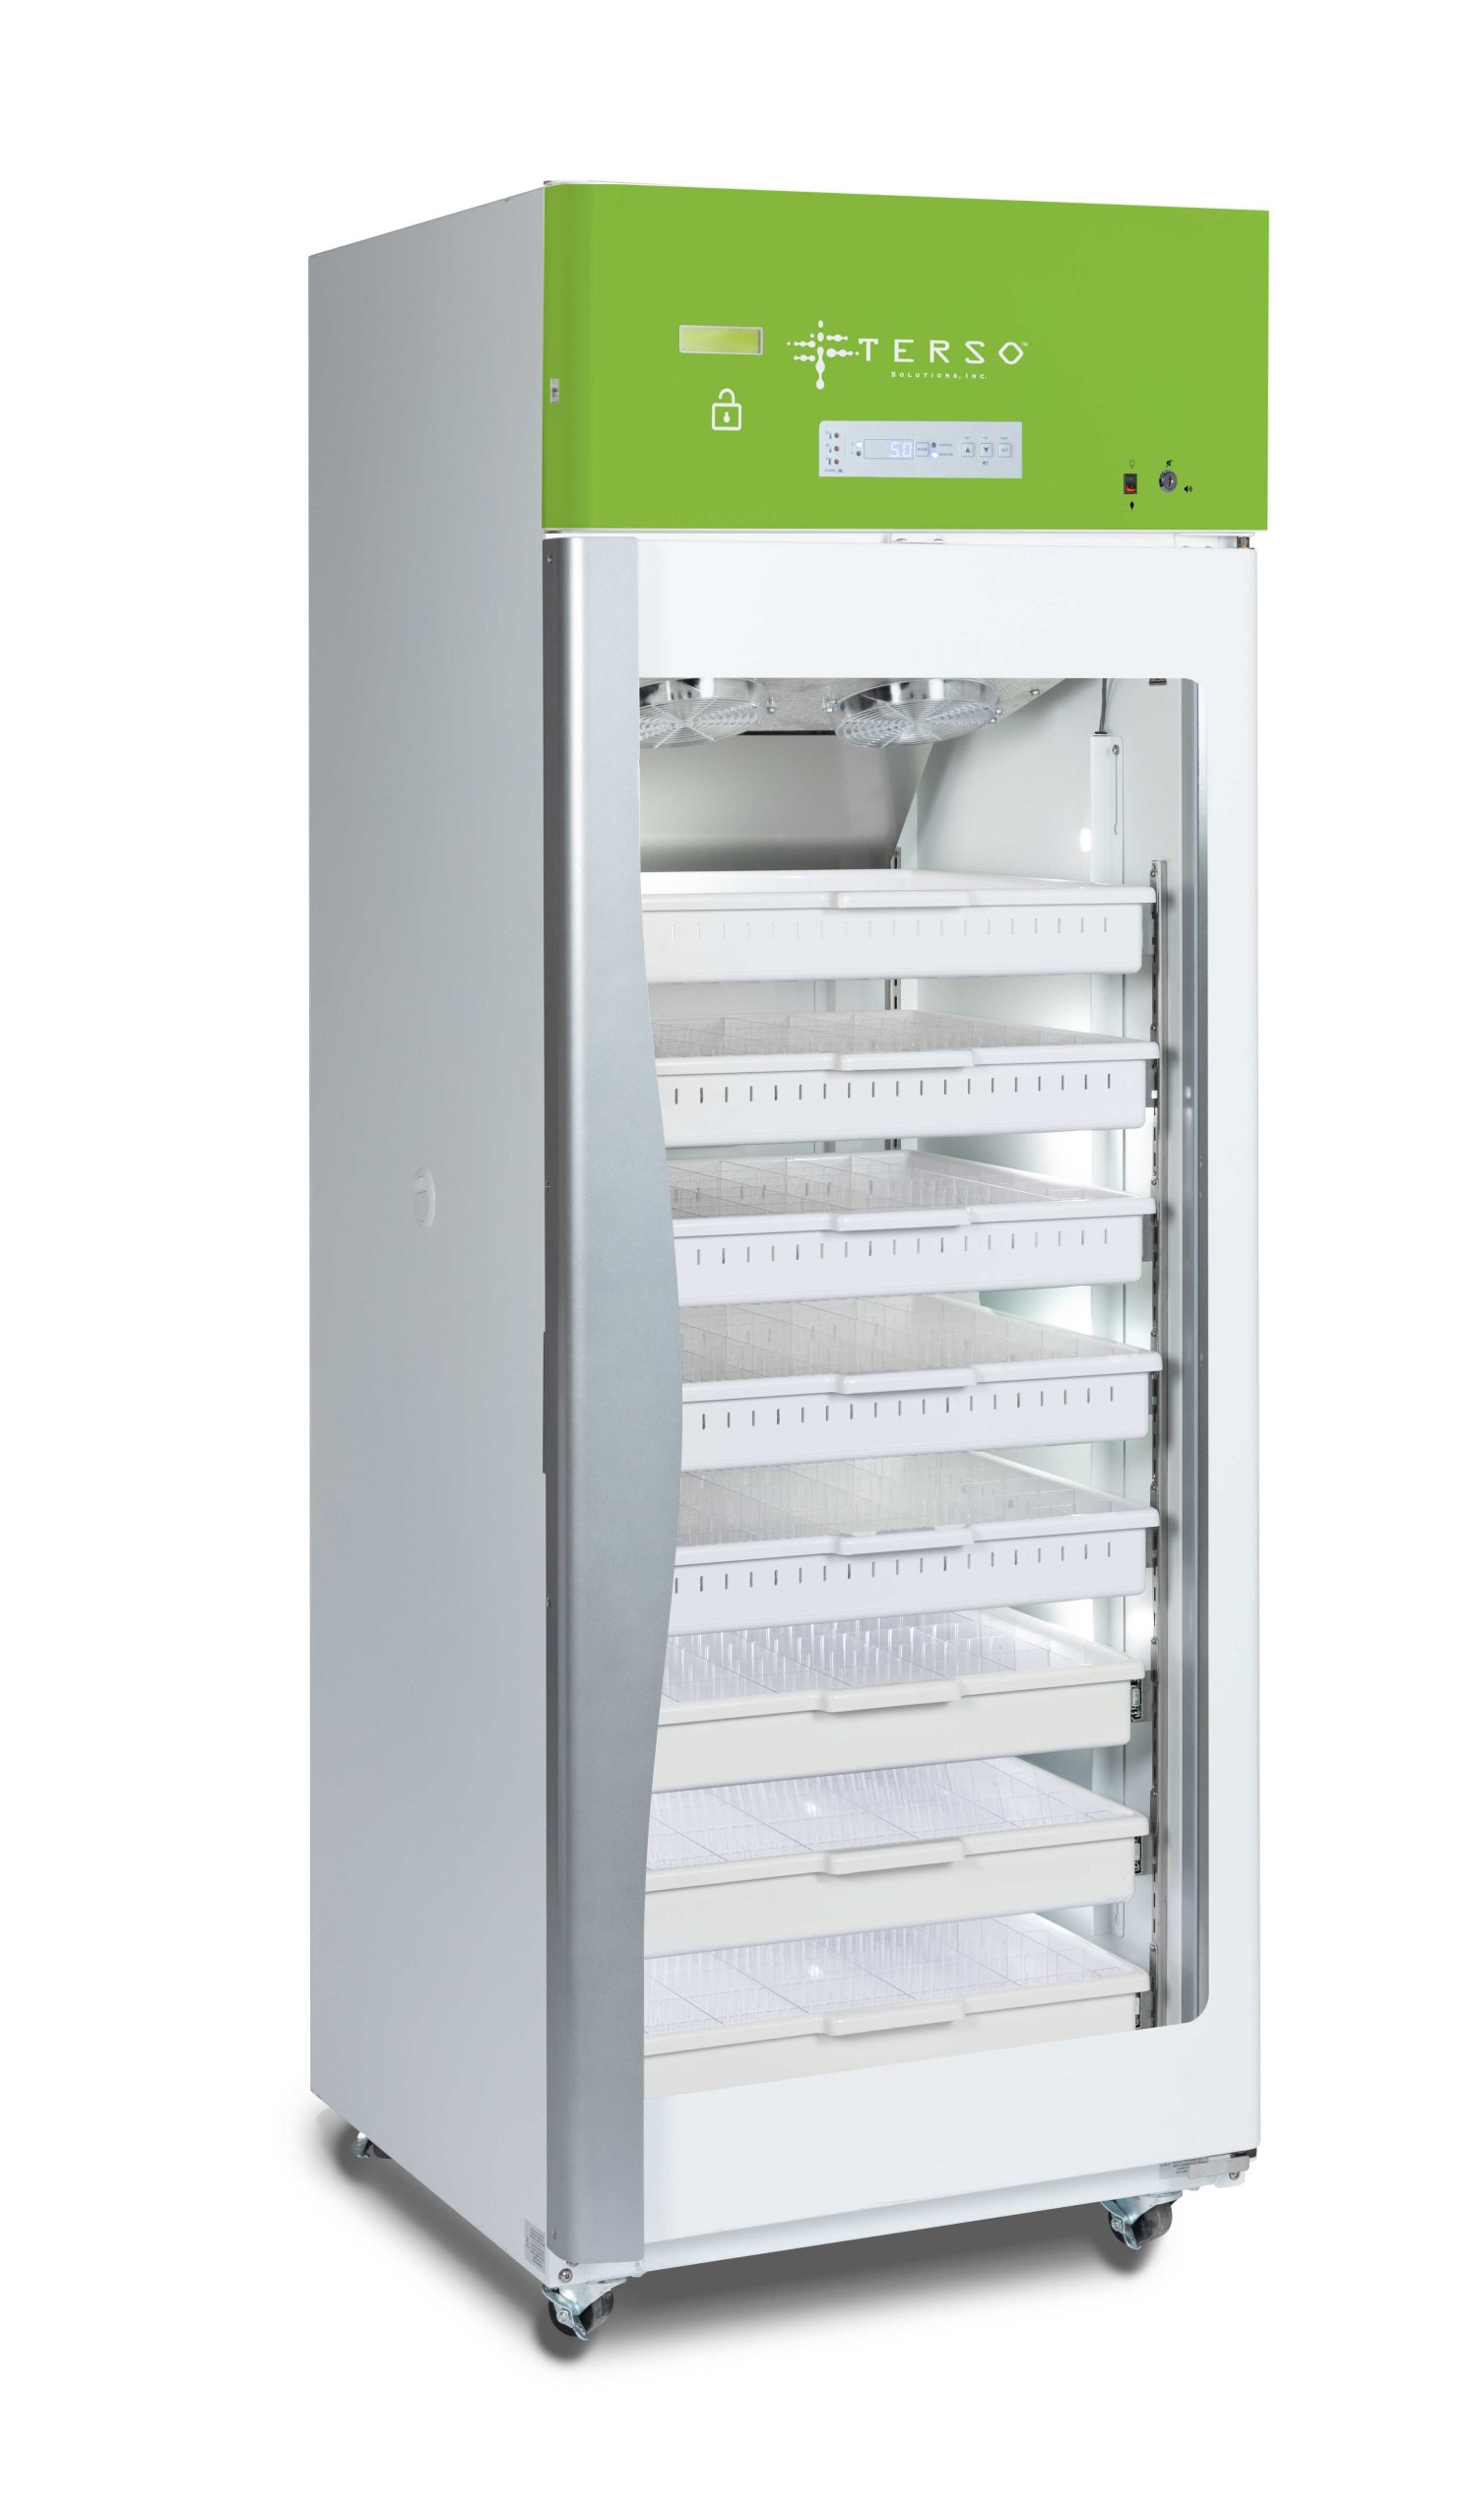 The Large RFID Refrigerator provides remote temperature monitoring